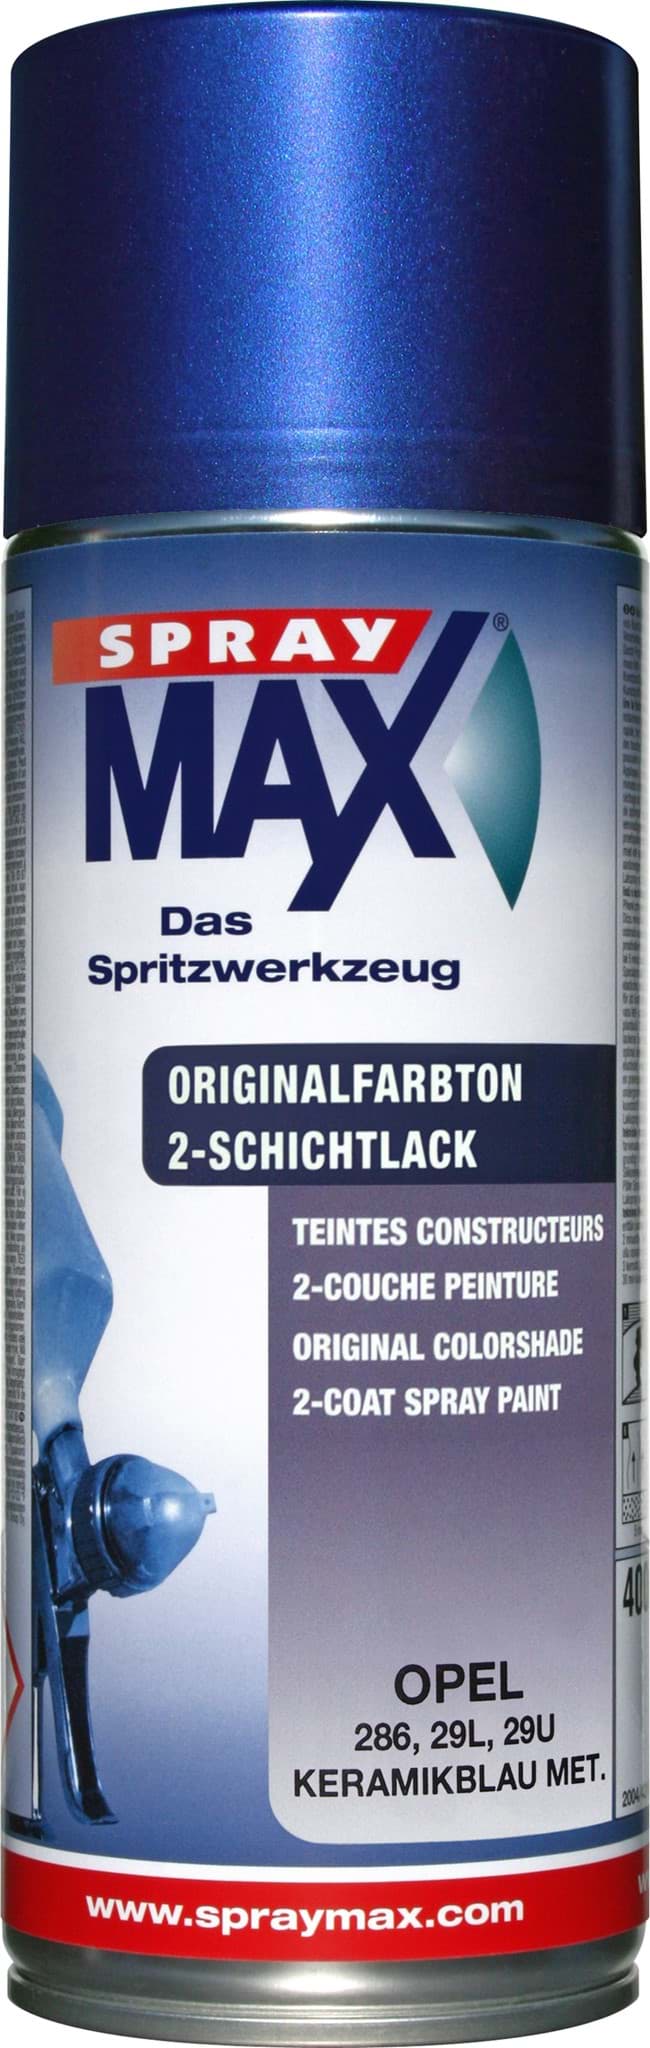 Afbeelding van SprayMax Originalfarbton für Opel 286 keramikblau met.